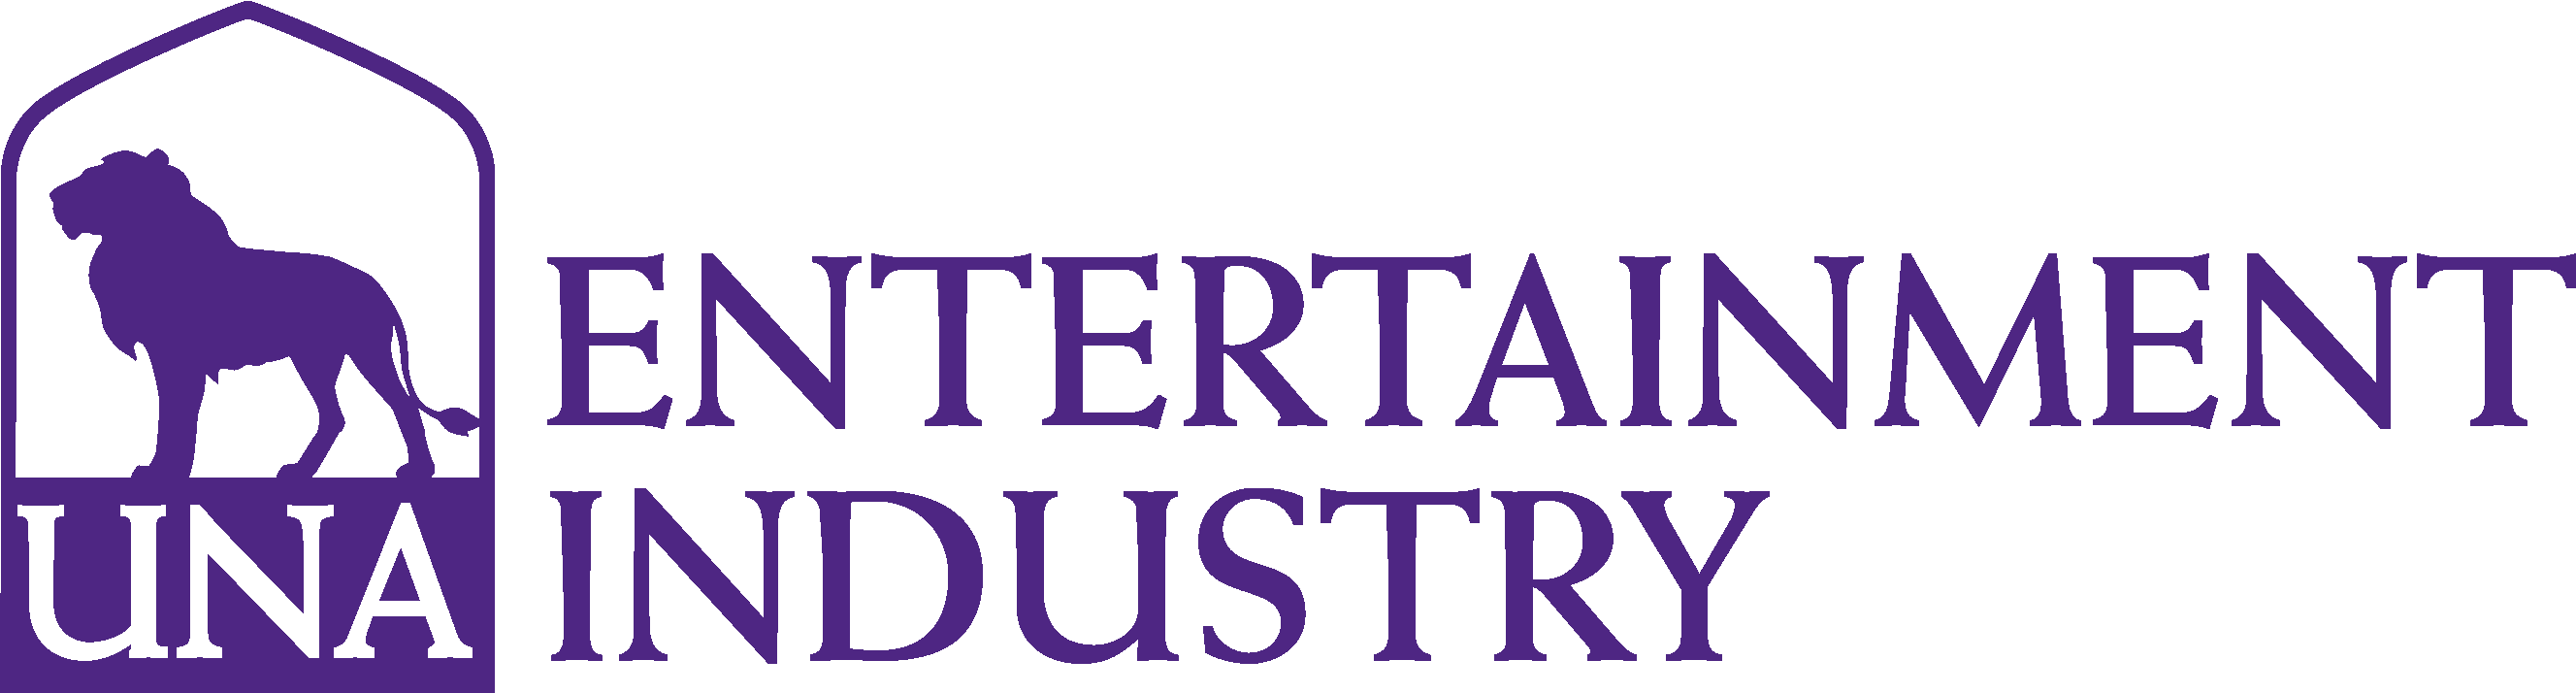 Entertainment Industry logo 3